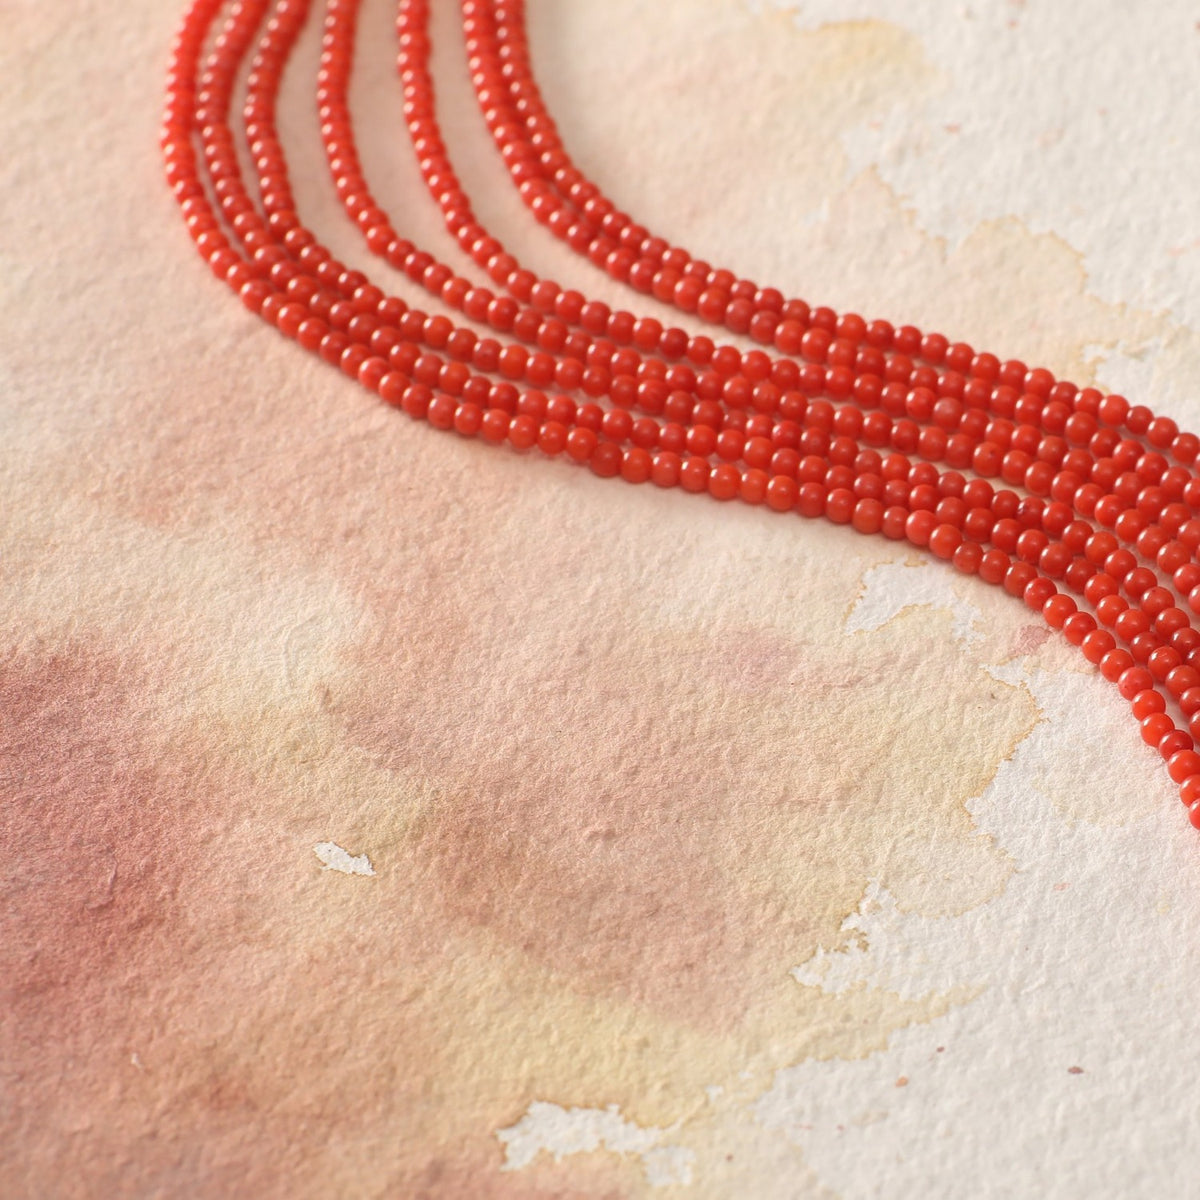 Taiwan Red Coral Semi Precious Gemstone Beads 5mm- Sold Per Strand